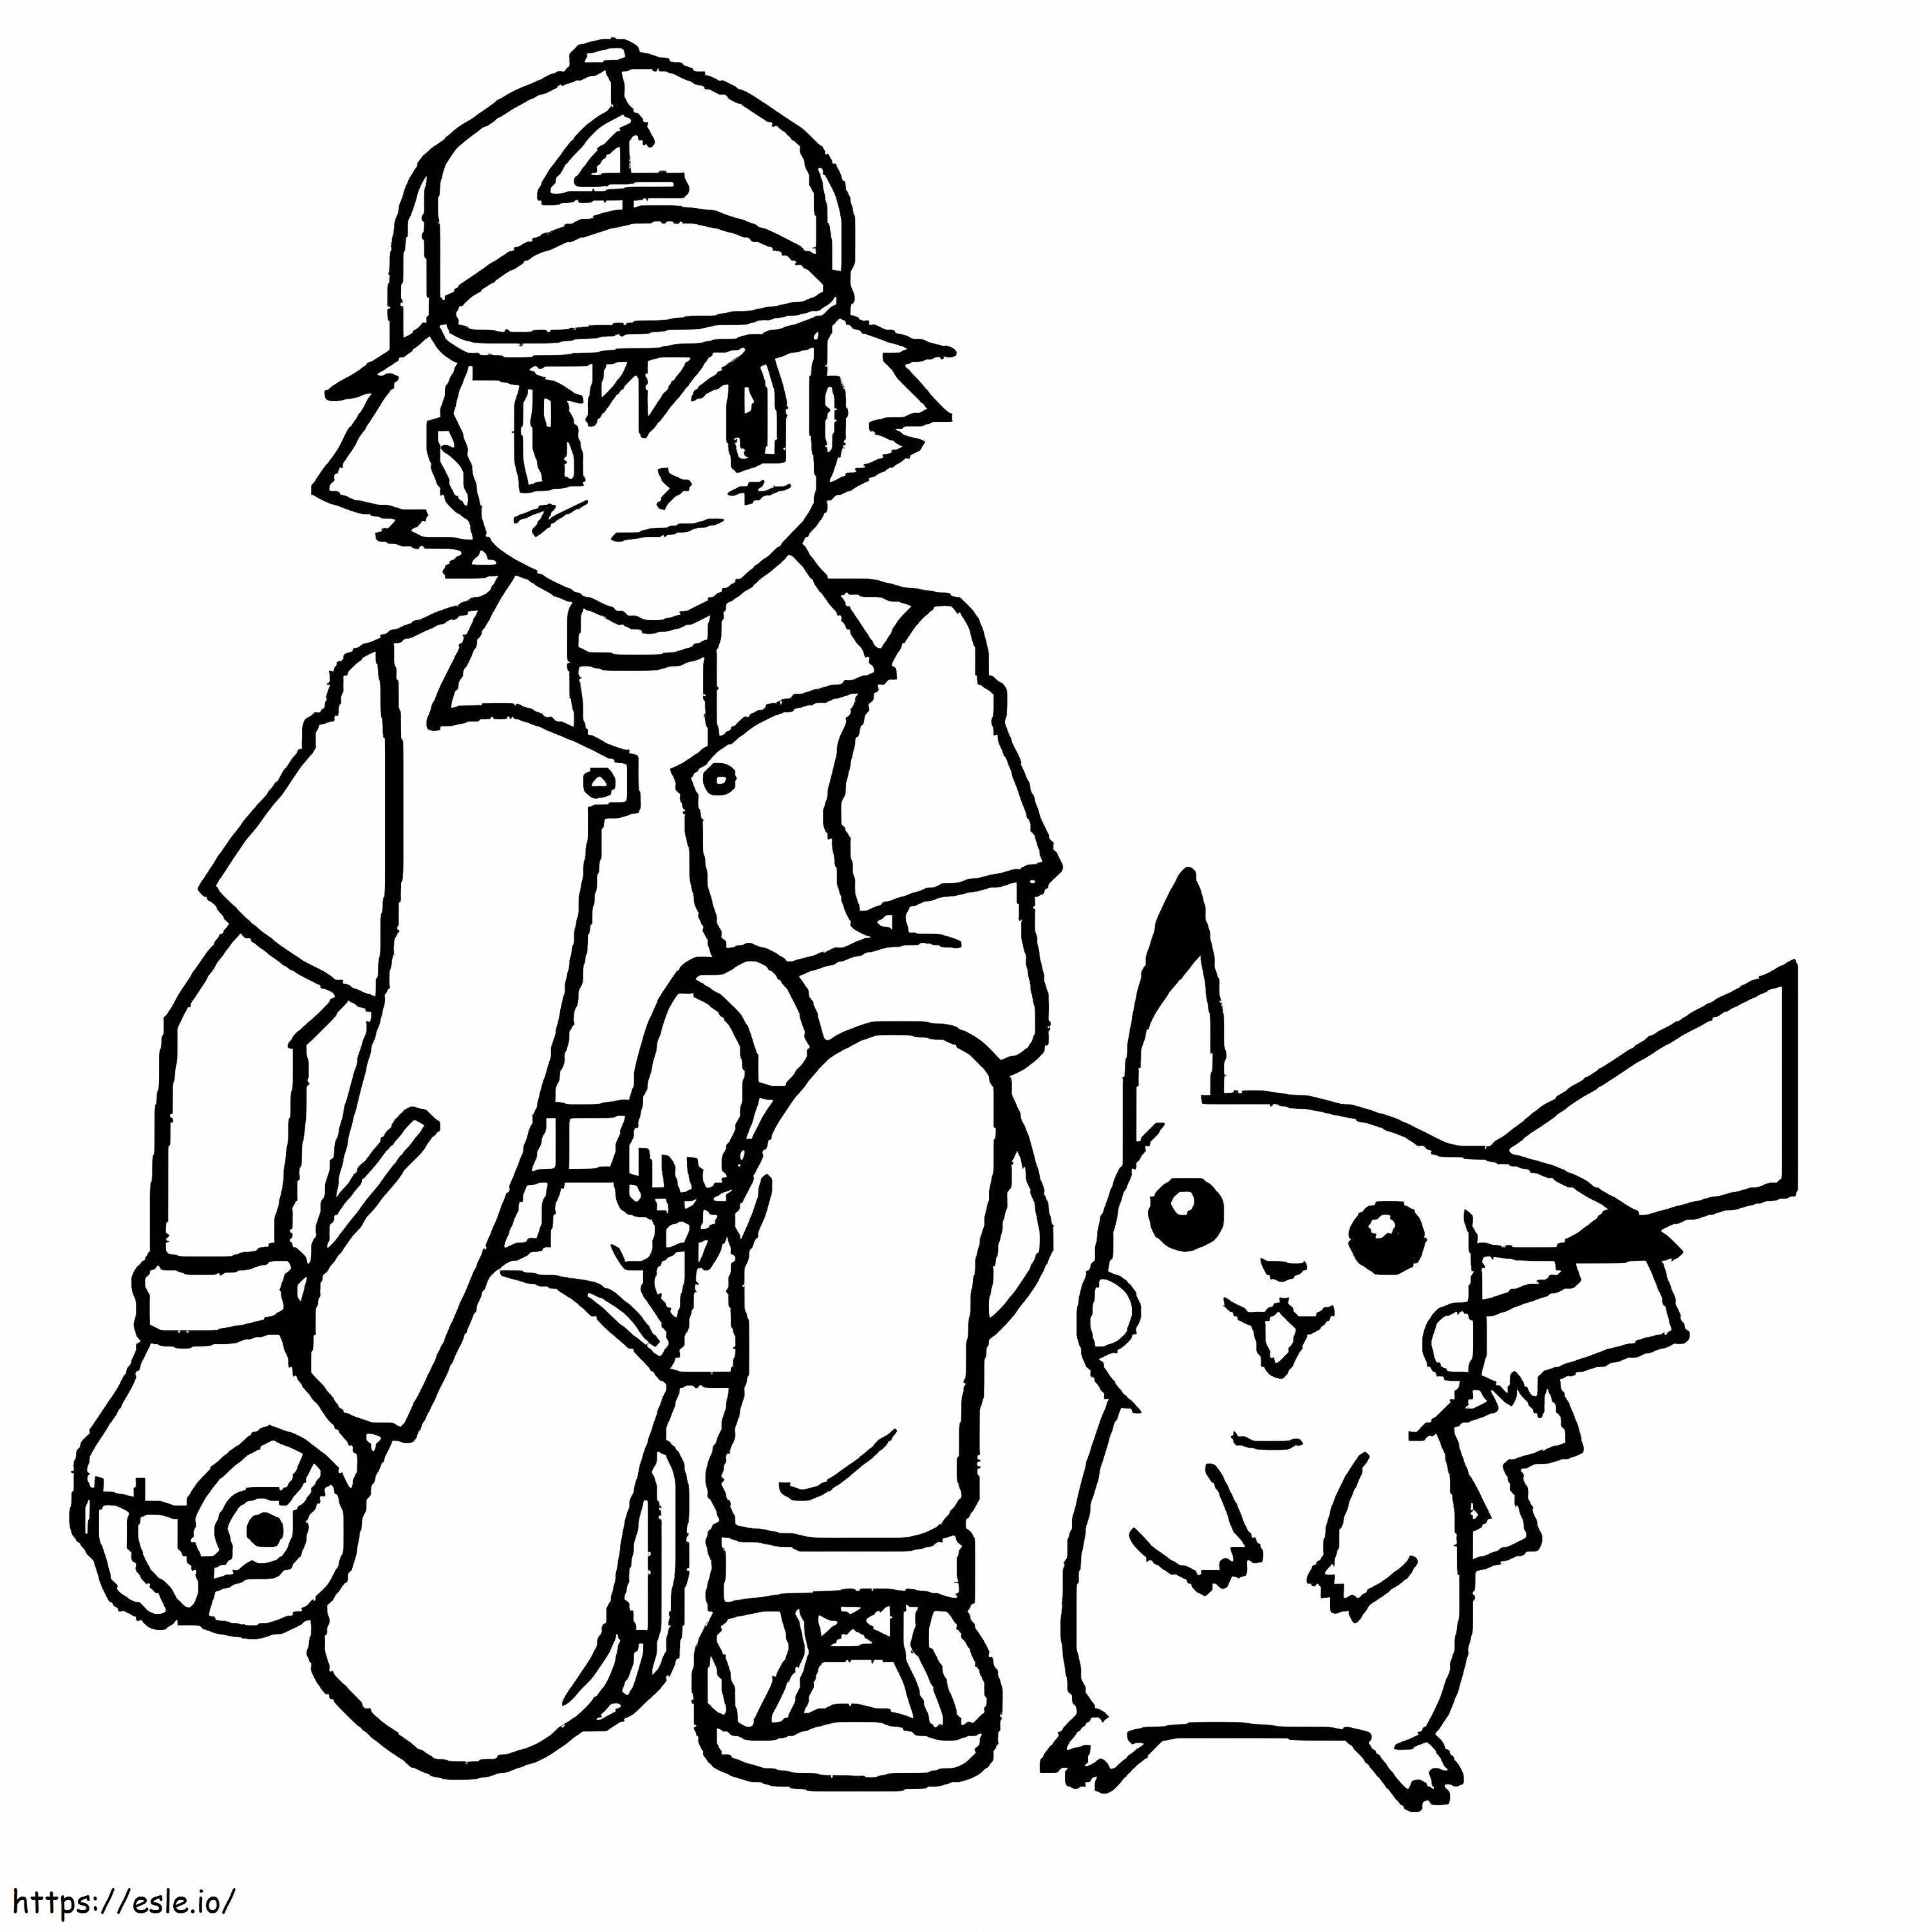 Satoshi i Pikachu kolorowanka